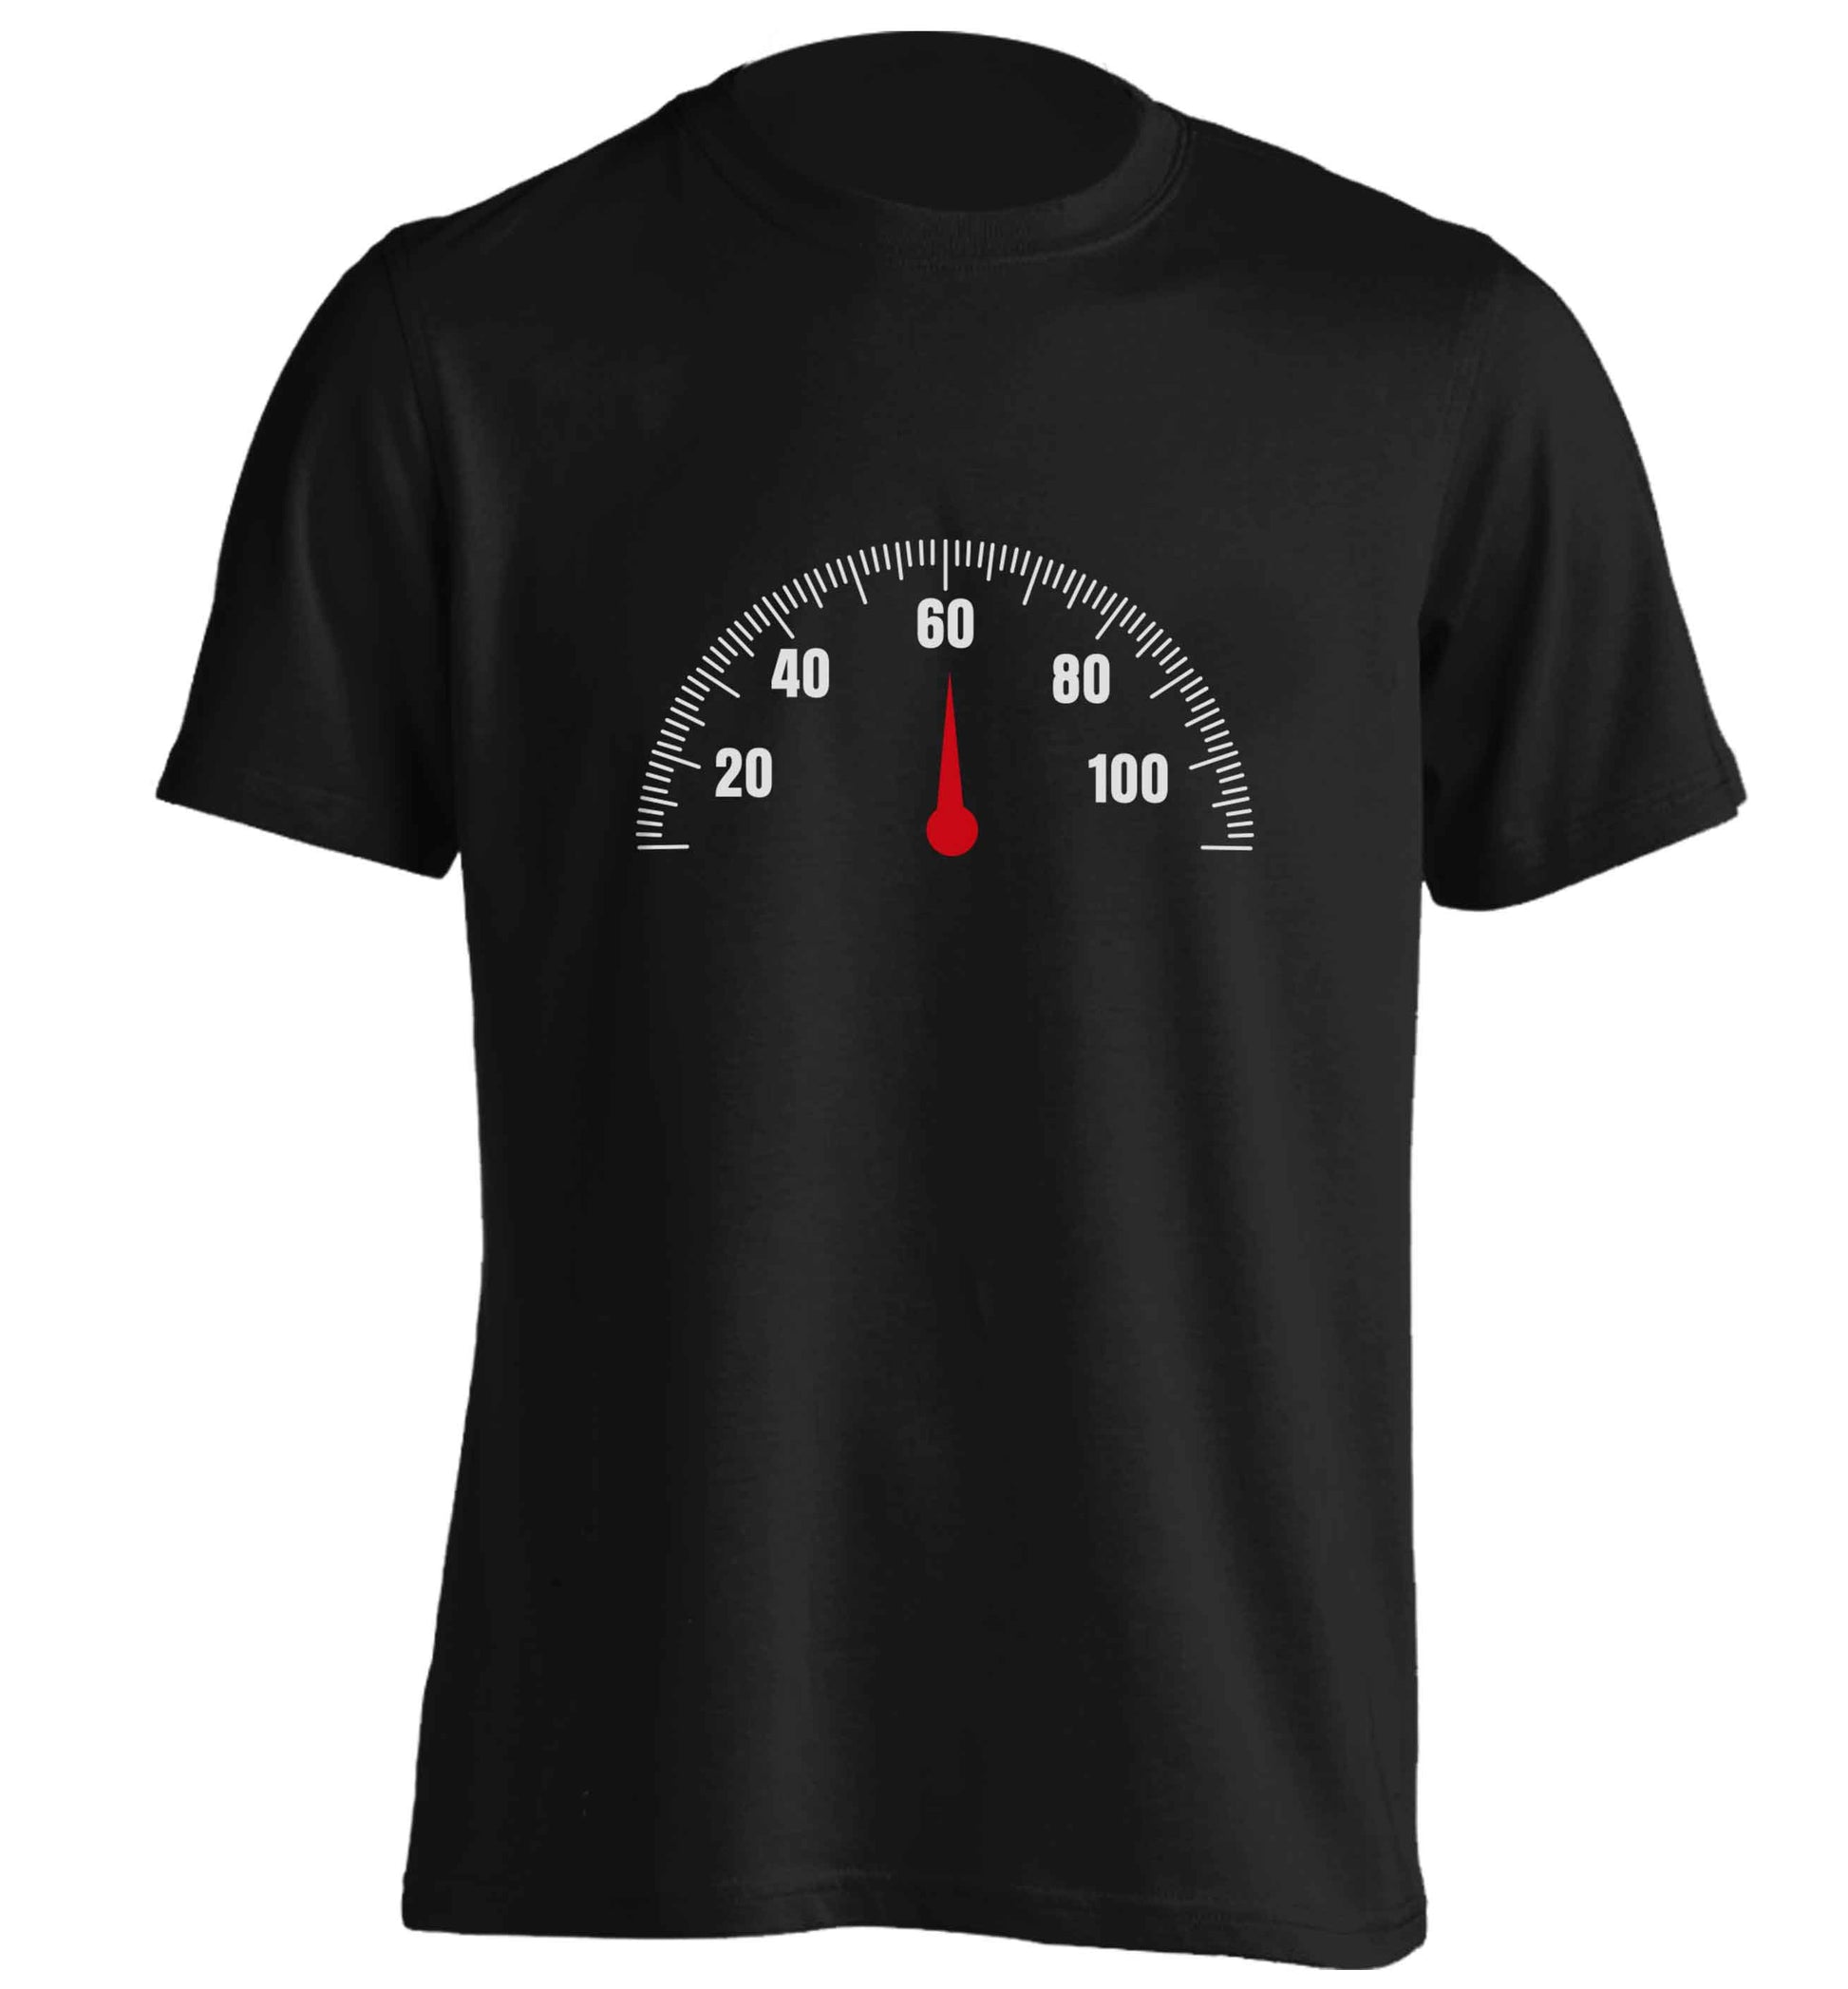 Speed dial 60 adults unisex black Tshirt 2XL